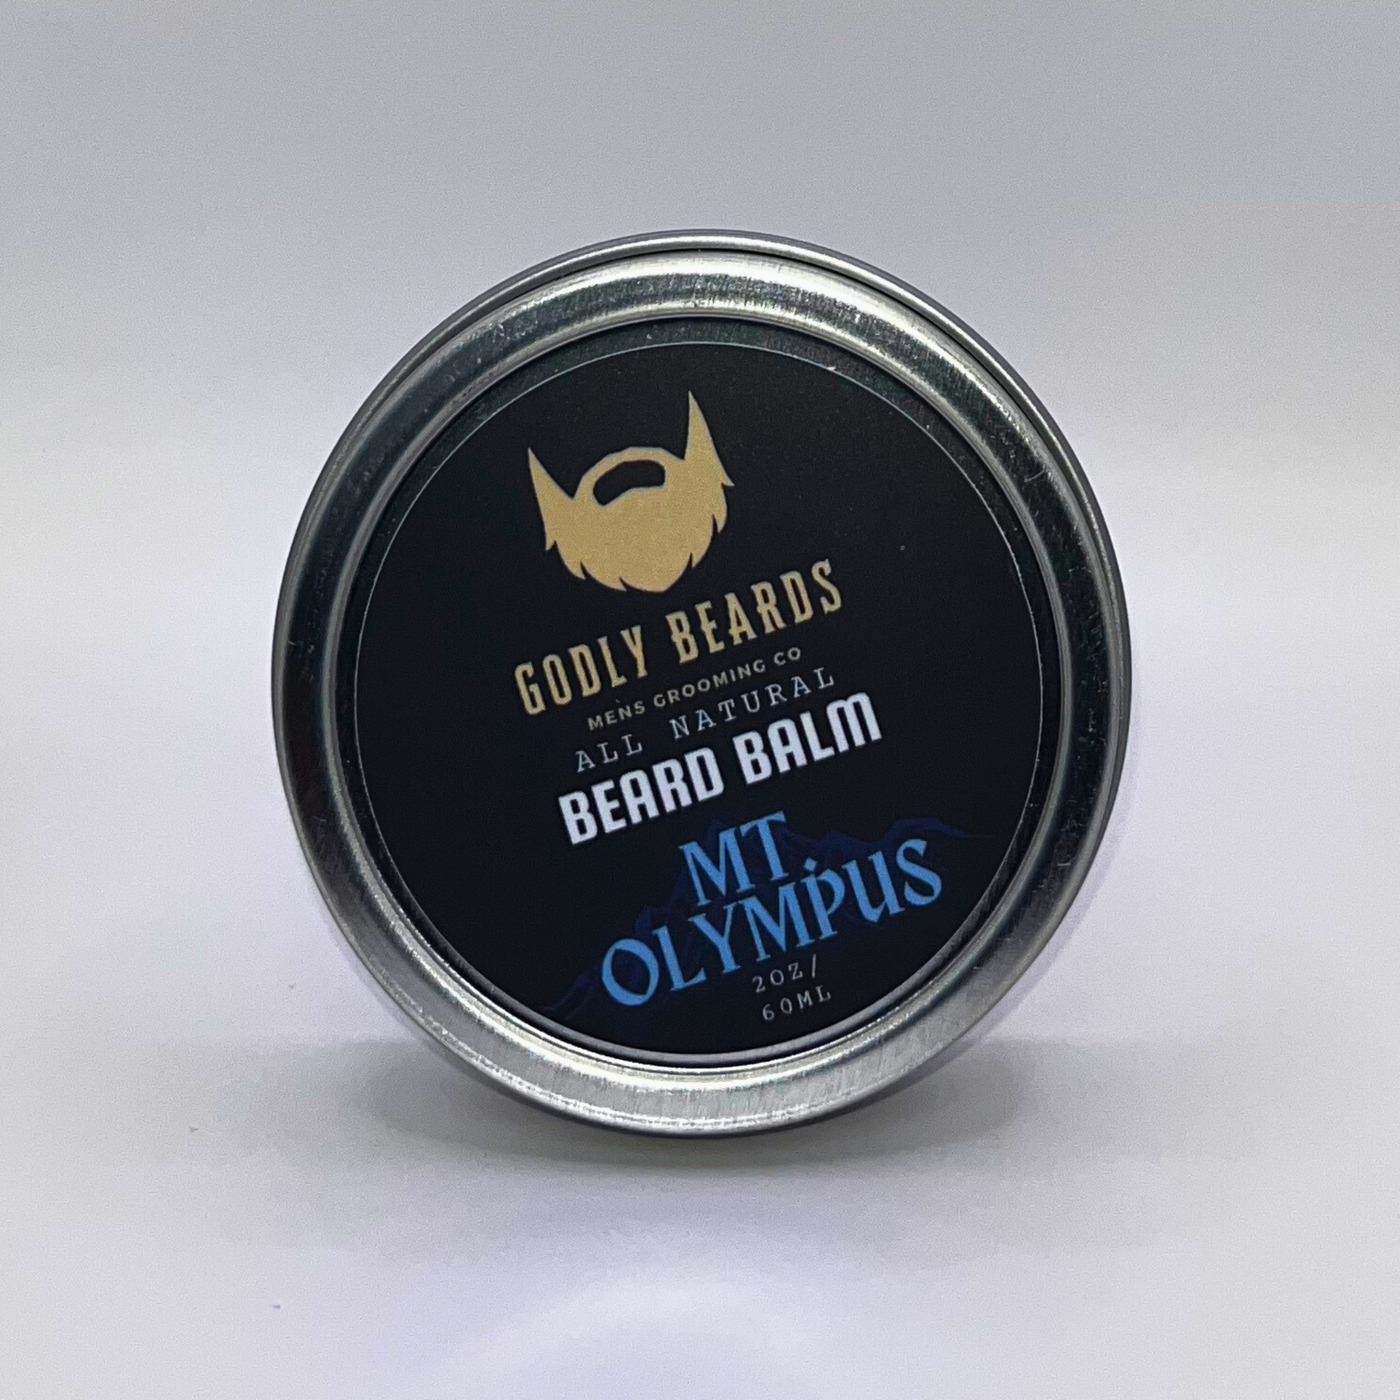 Mt. Olympus Beard Balm - Godly Beards